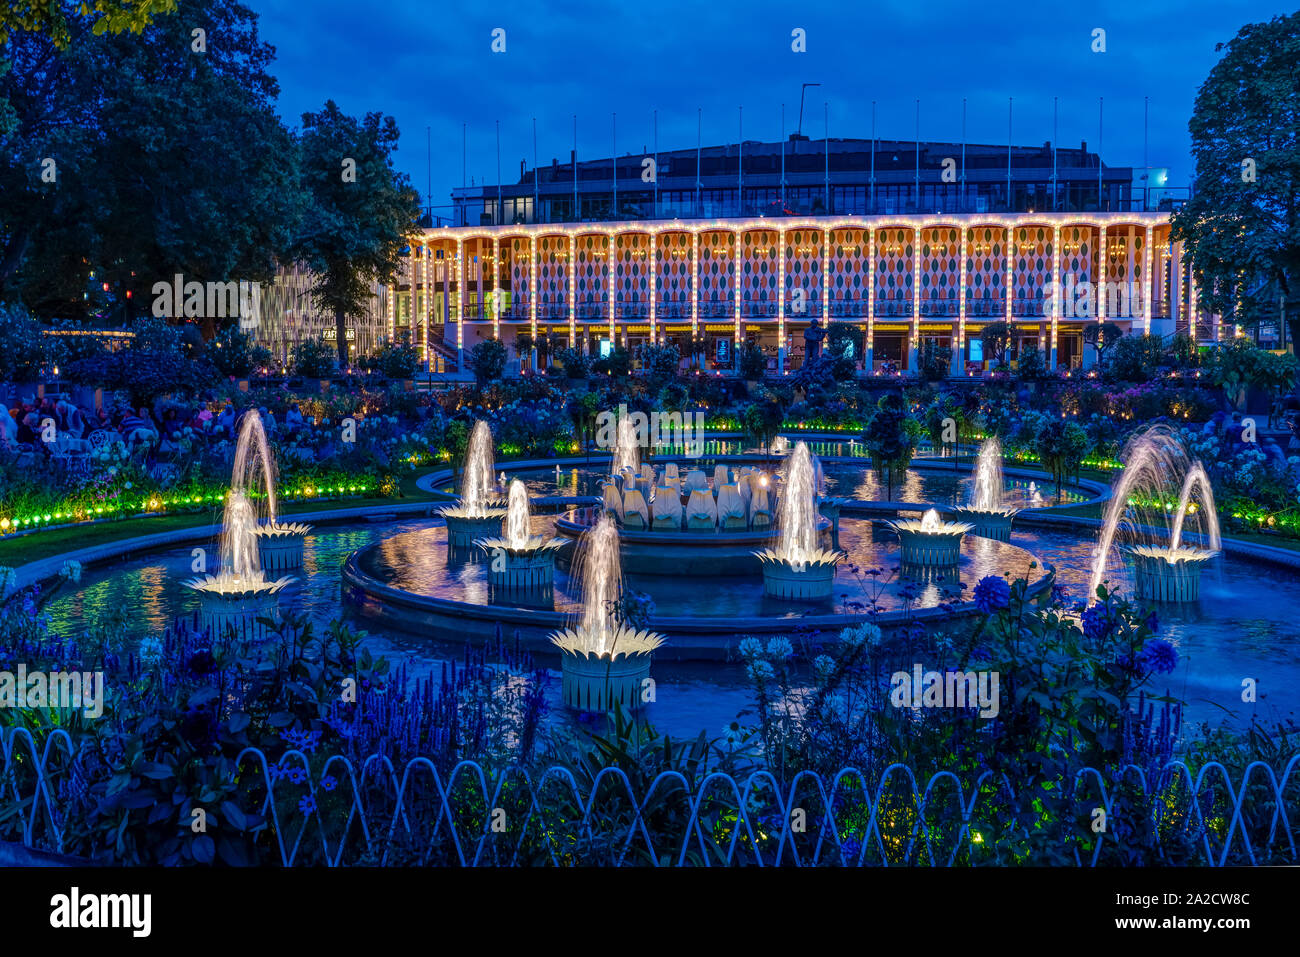 The Tivoli Gardens Concert Hall and fountains illuminated at night in Copenhagen, Denmark. Stock Photo